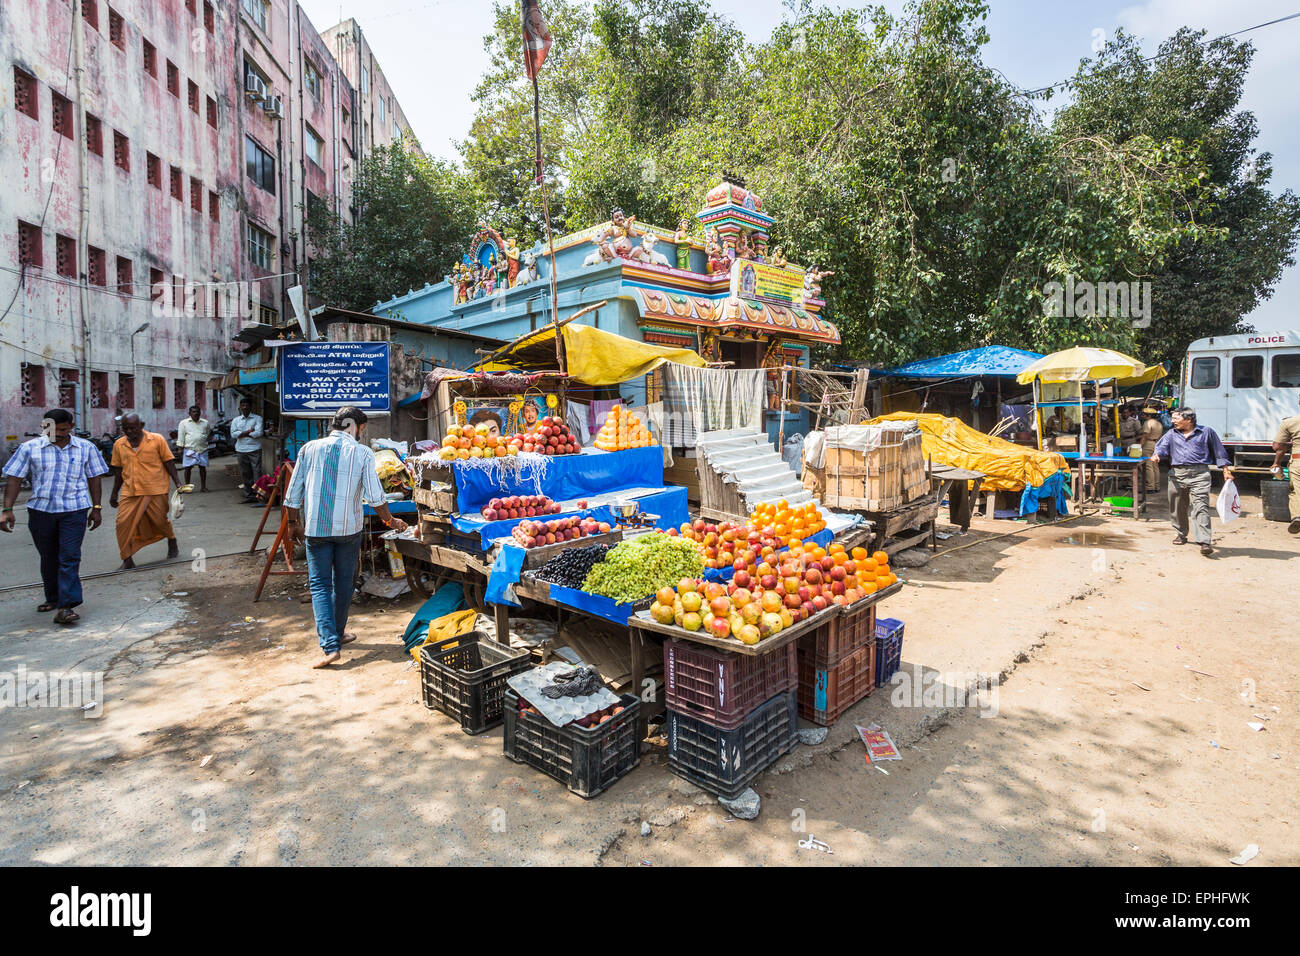 Colourful roadside fruit market trader's stall, typical street scene, Chennai, Tamil Nadu, southern India Stock Photo